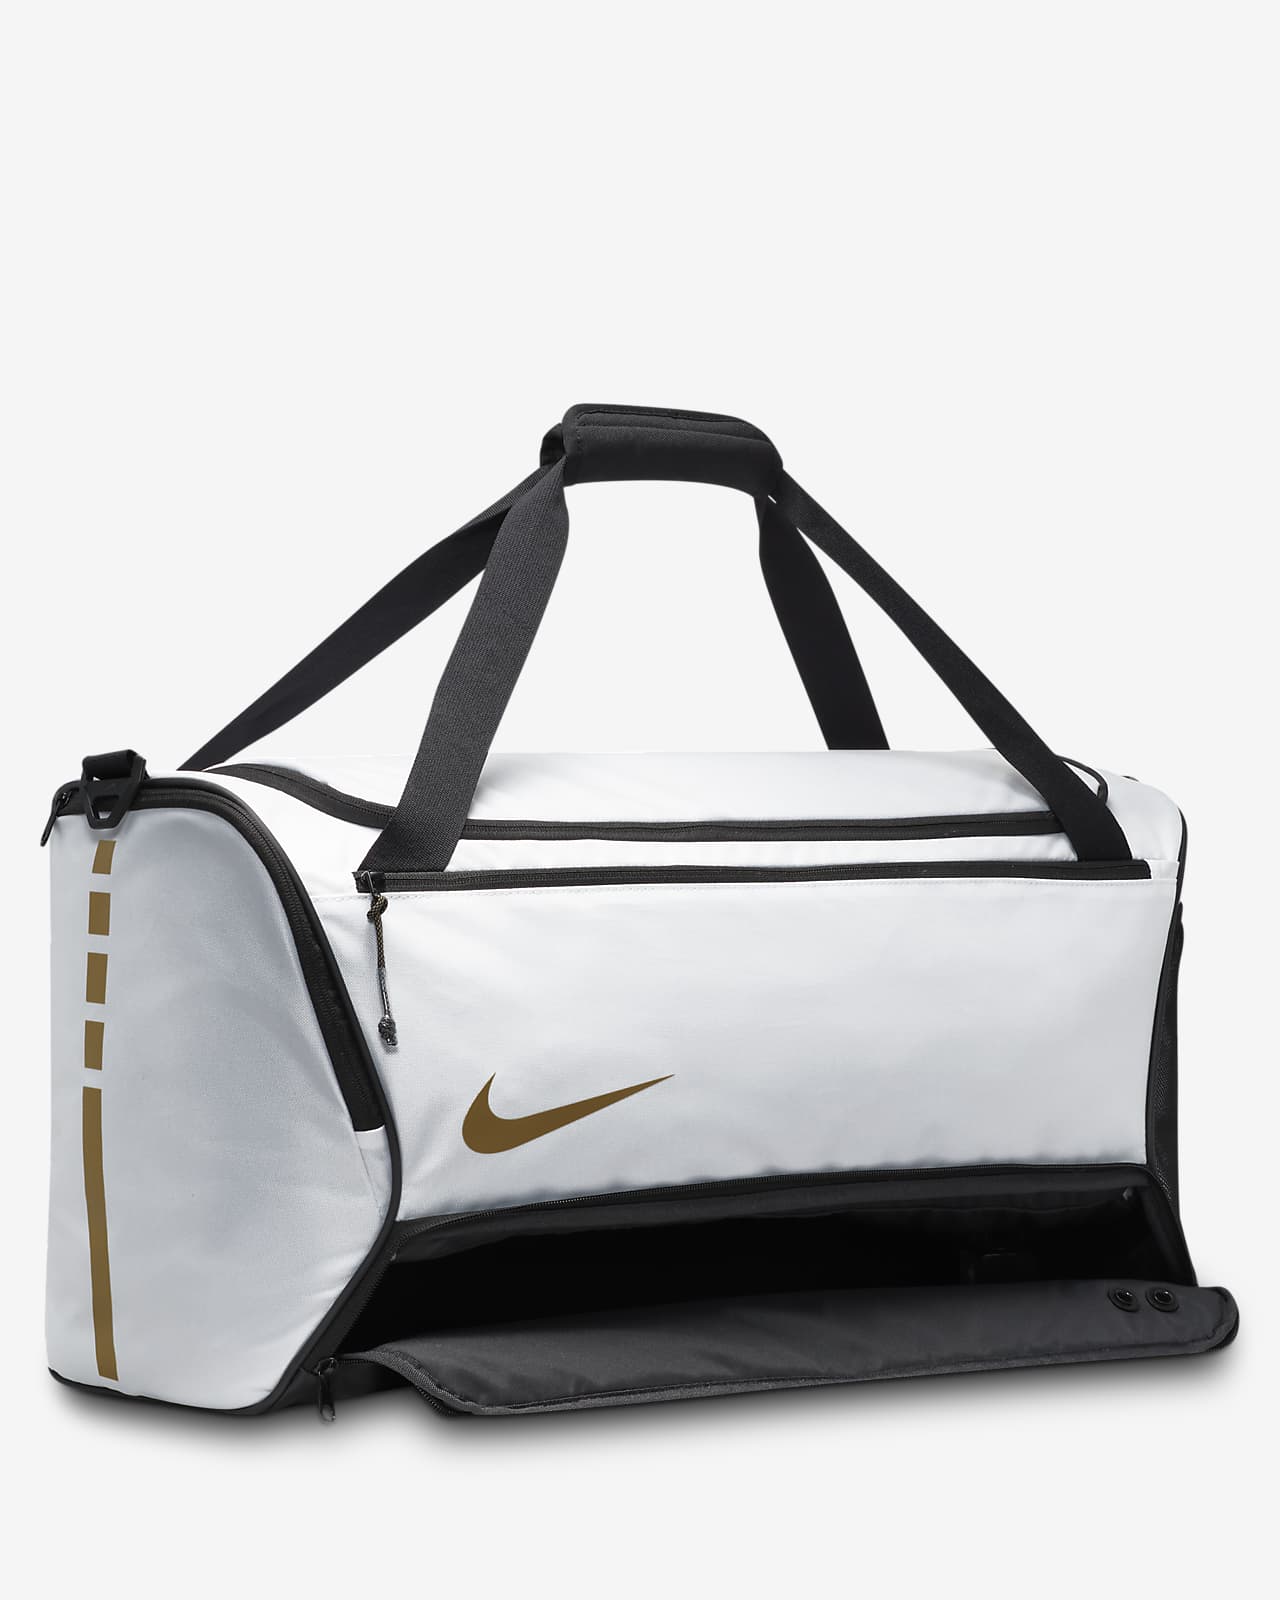 CAISSON the CC2002 Go Bag | Unlimited Seven Sports Equipment Bag